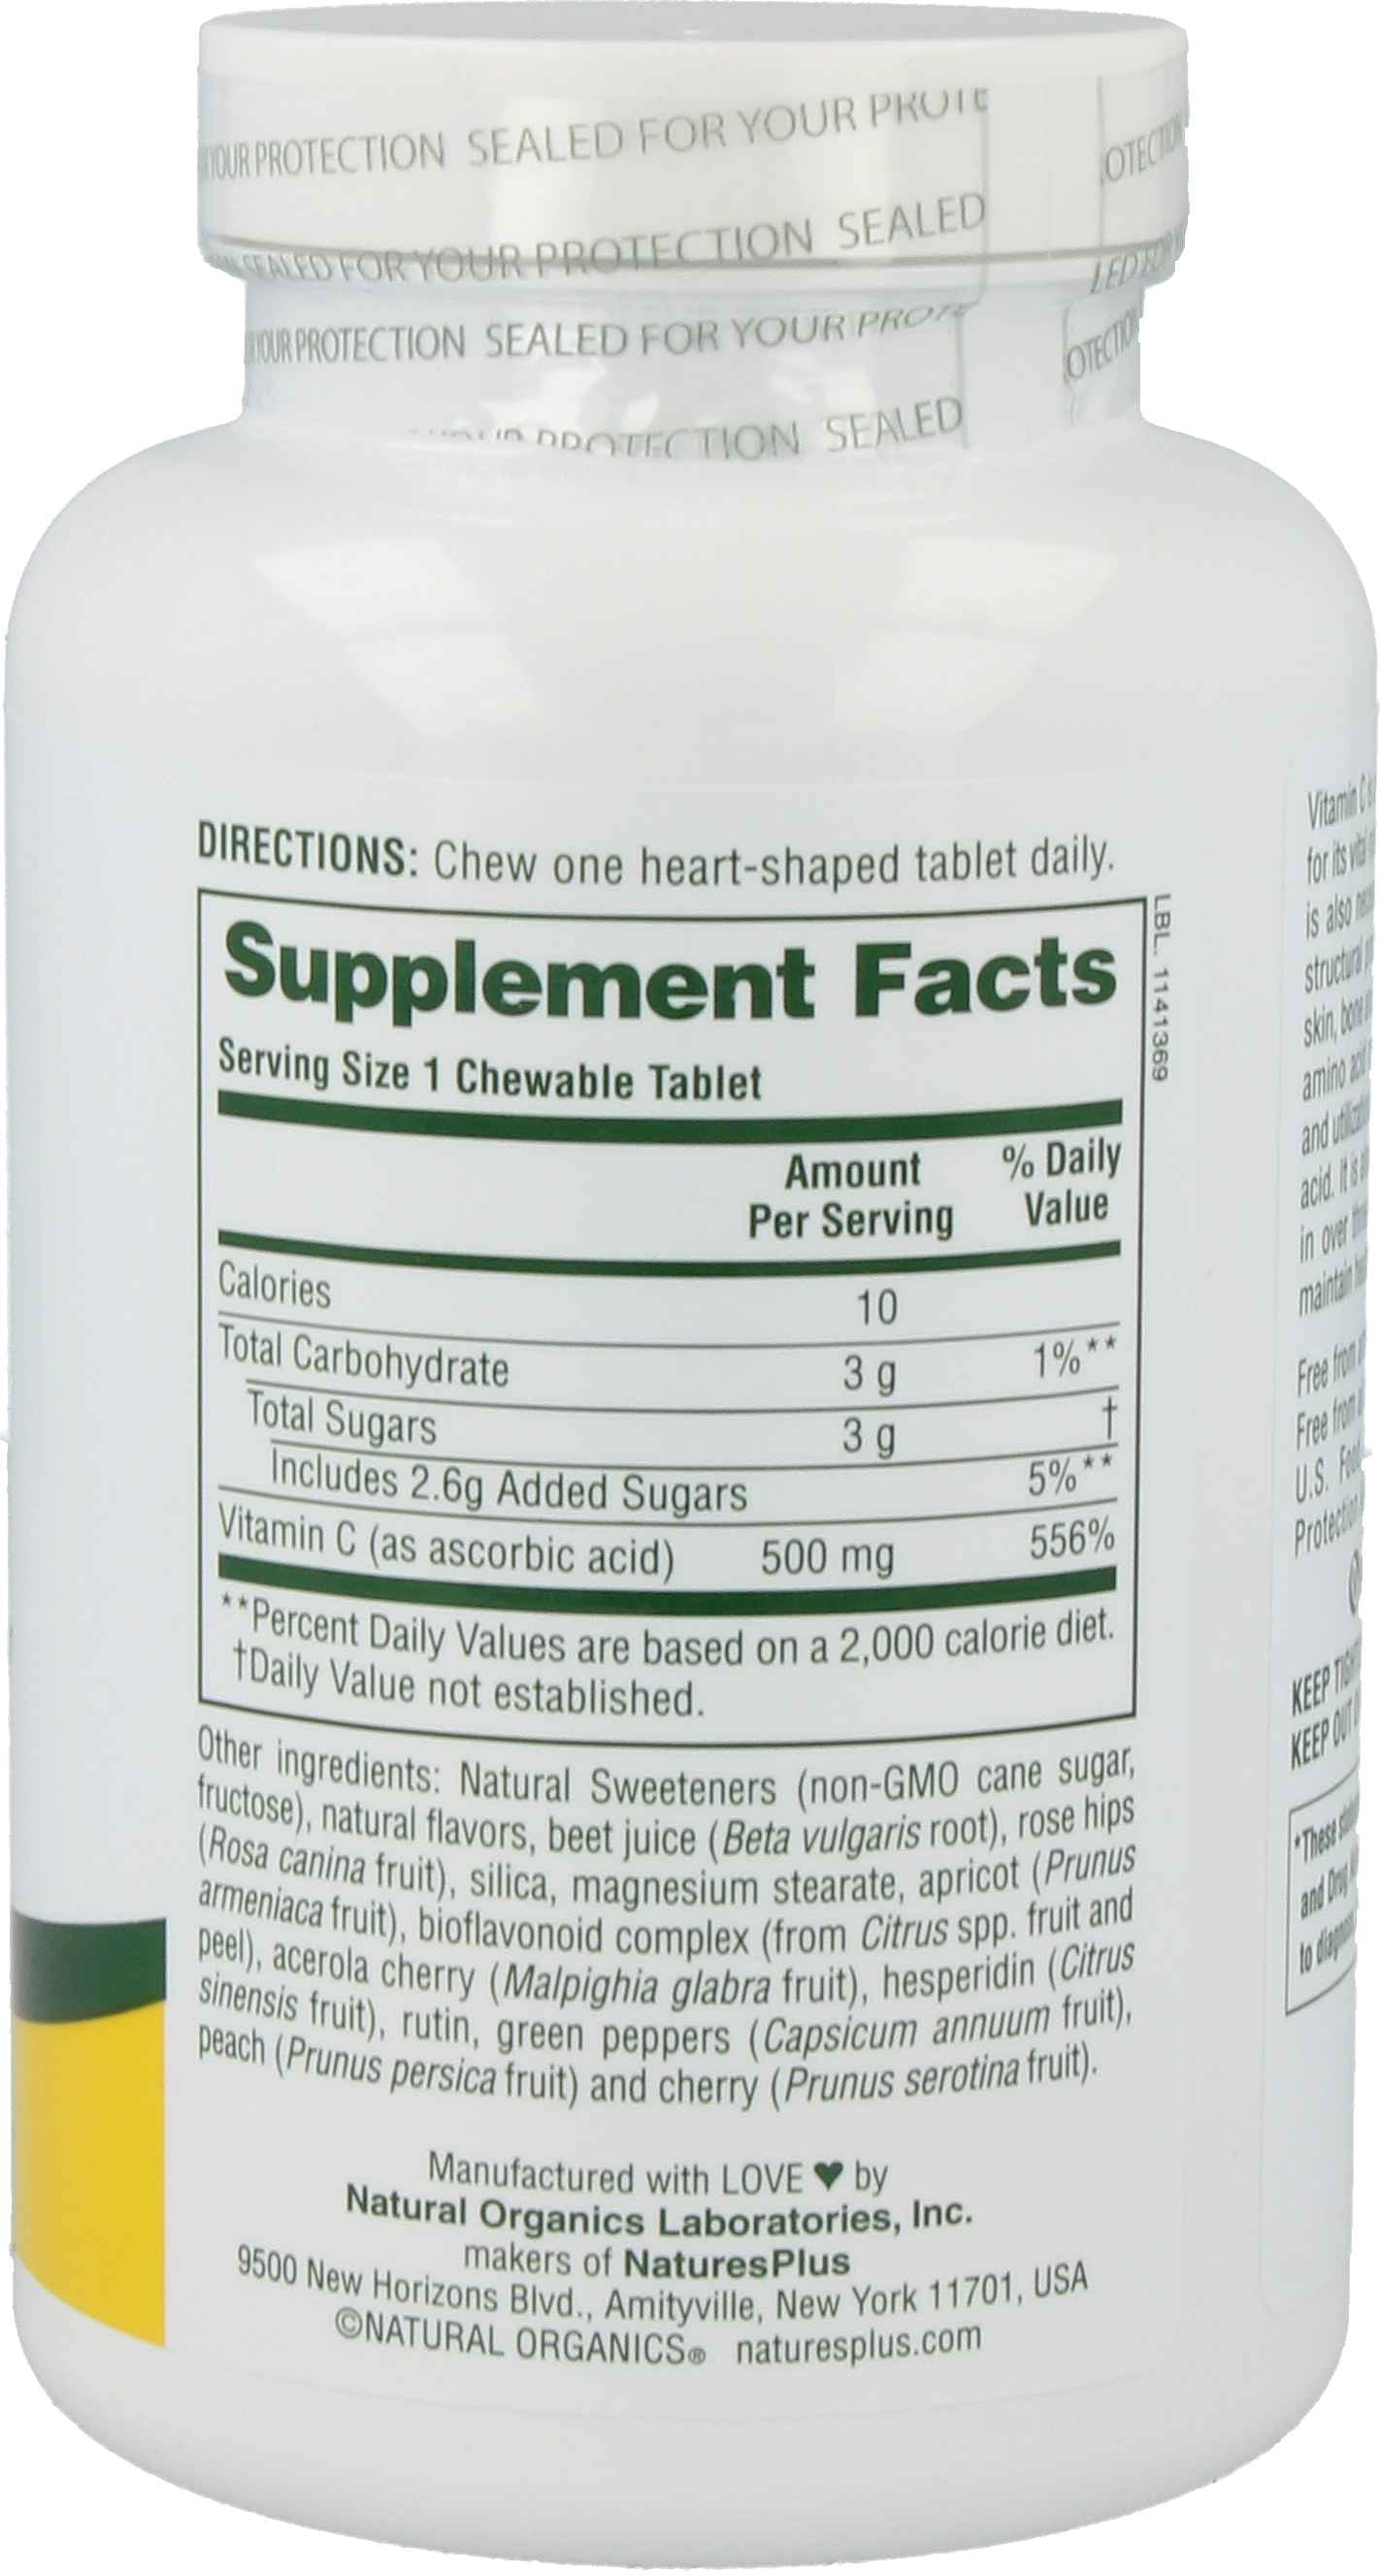 Lovites® 500 mg Vitamin C 